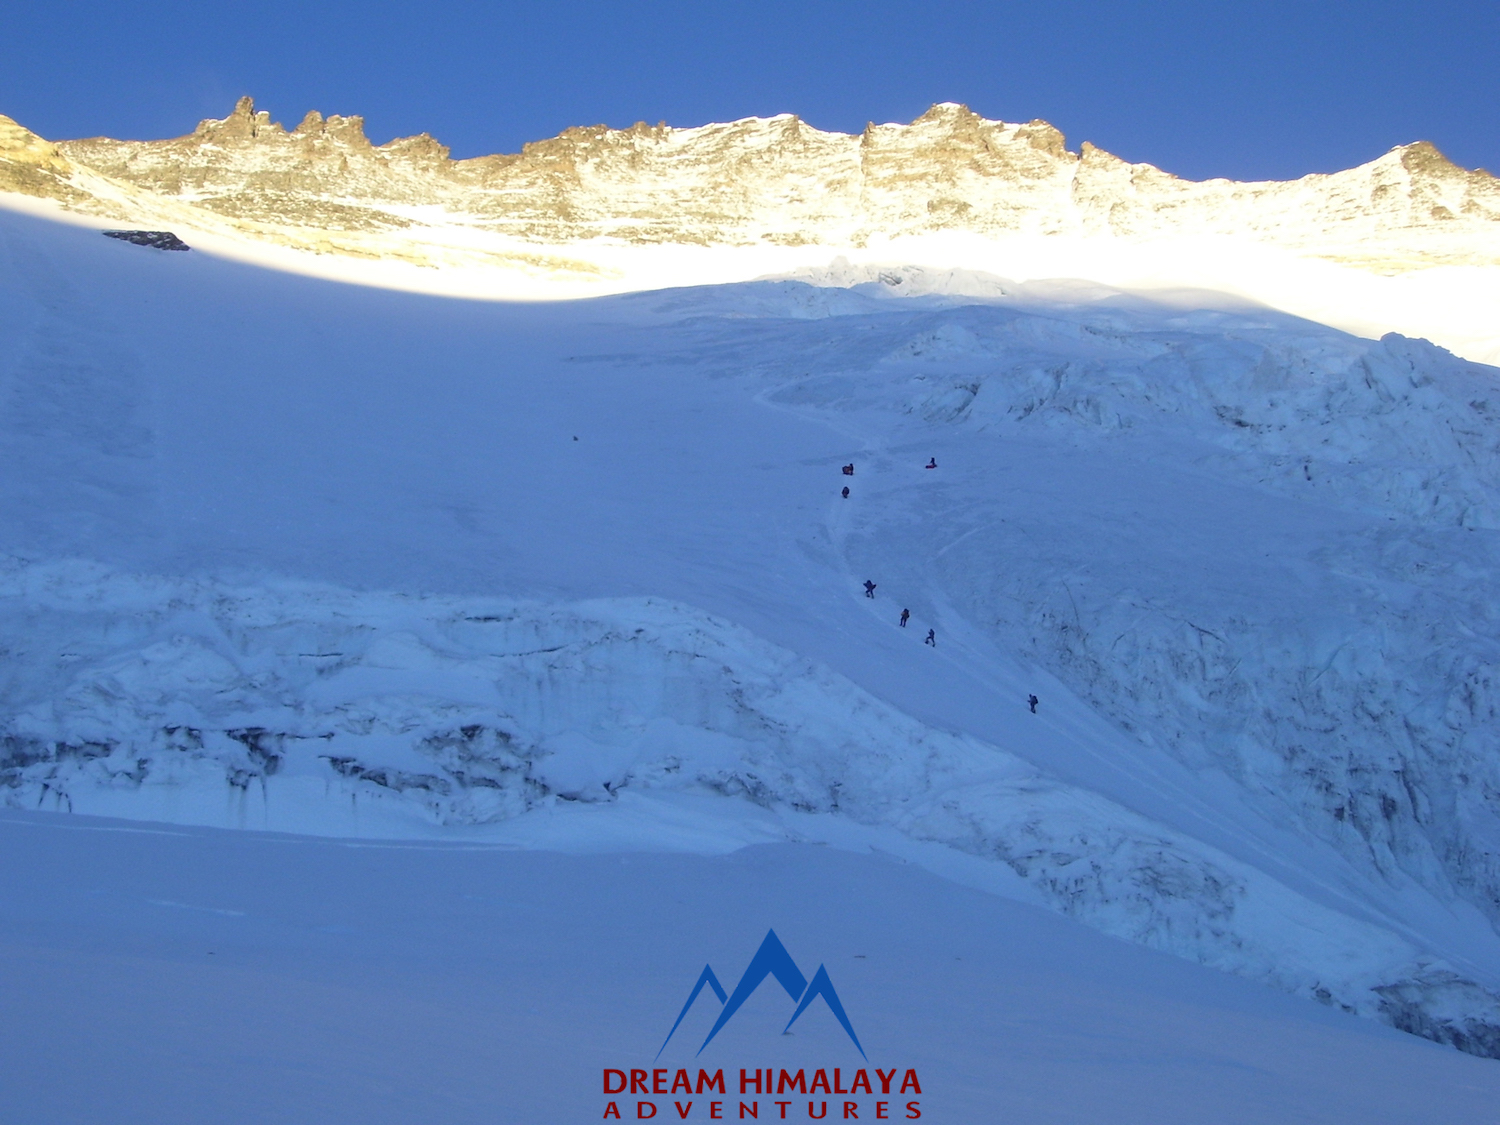 Lhotse Face from Camp II